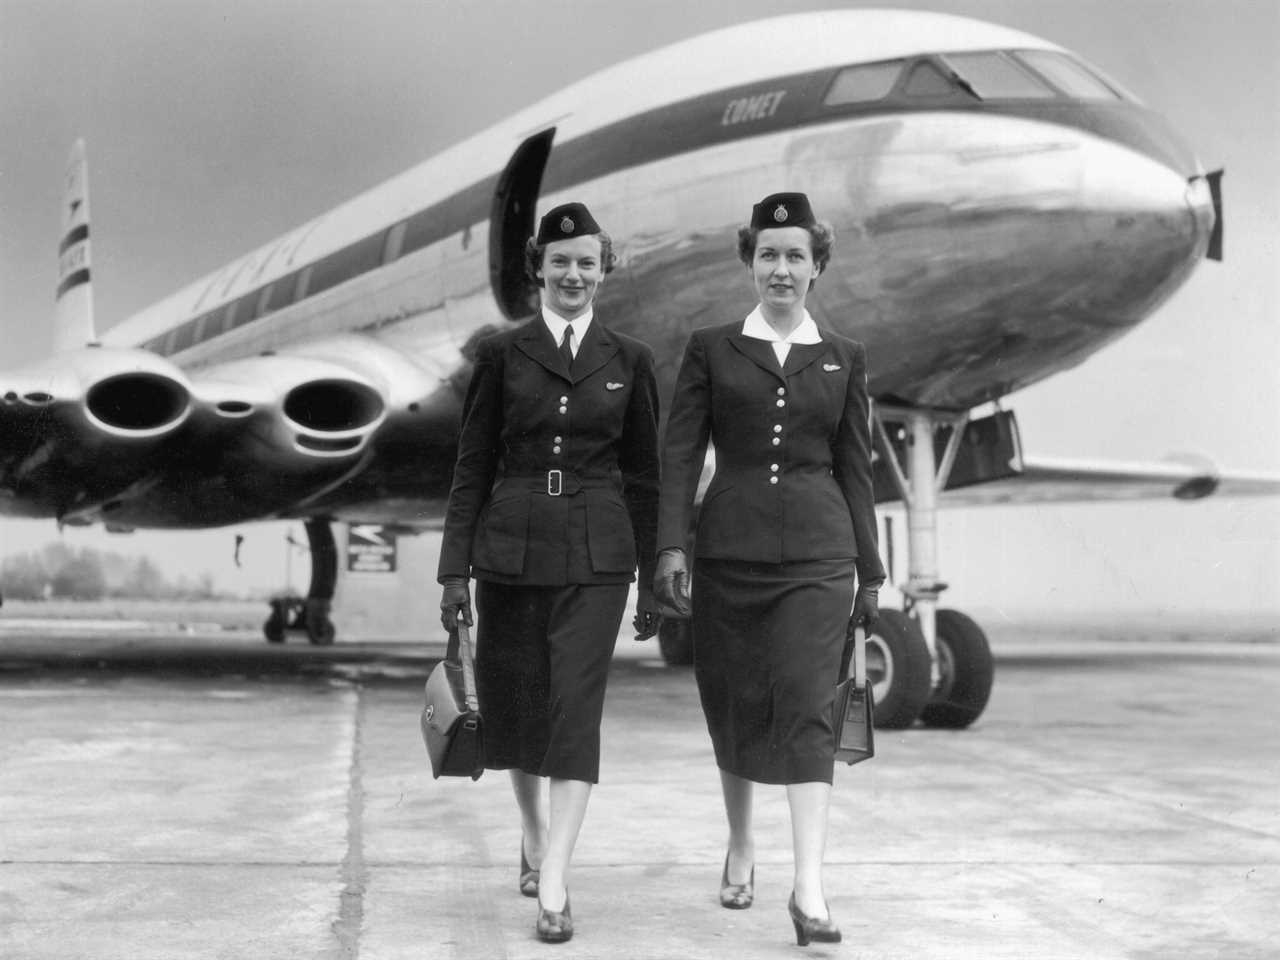 "Air hostesses" circa 1950.